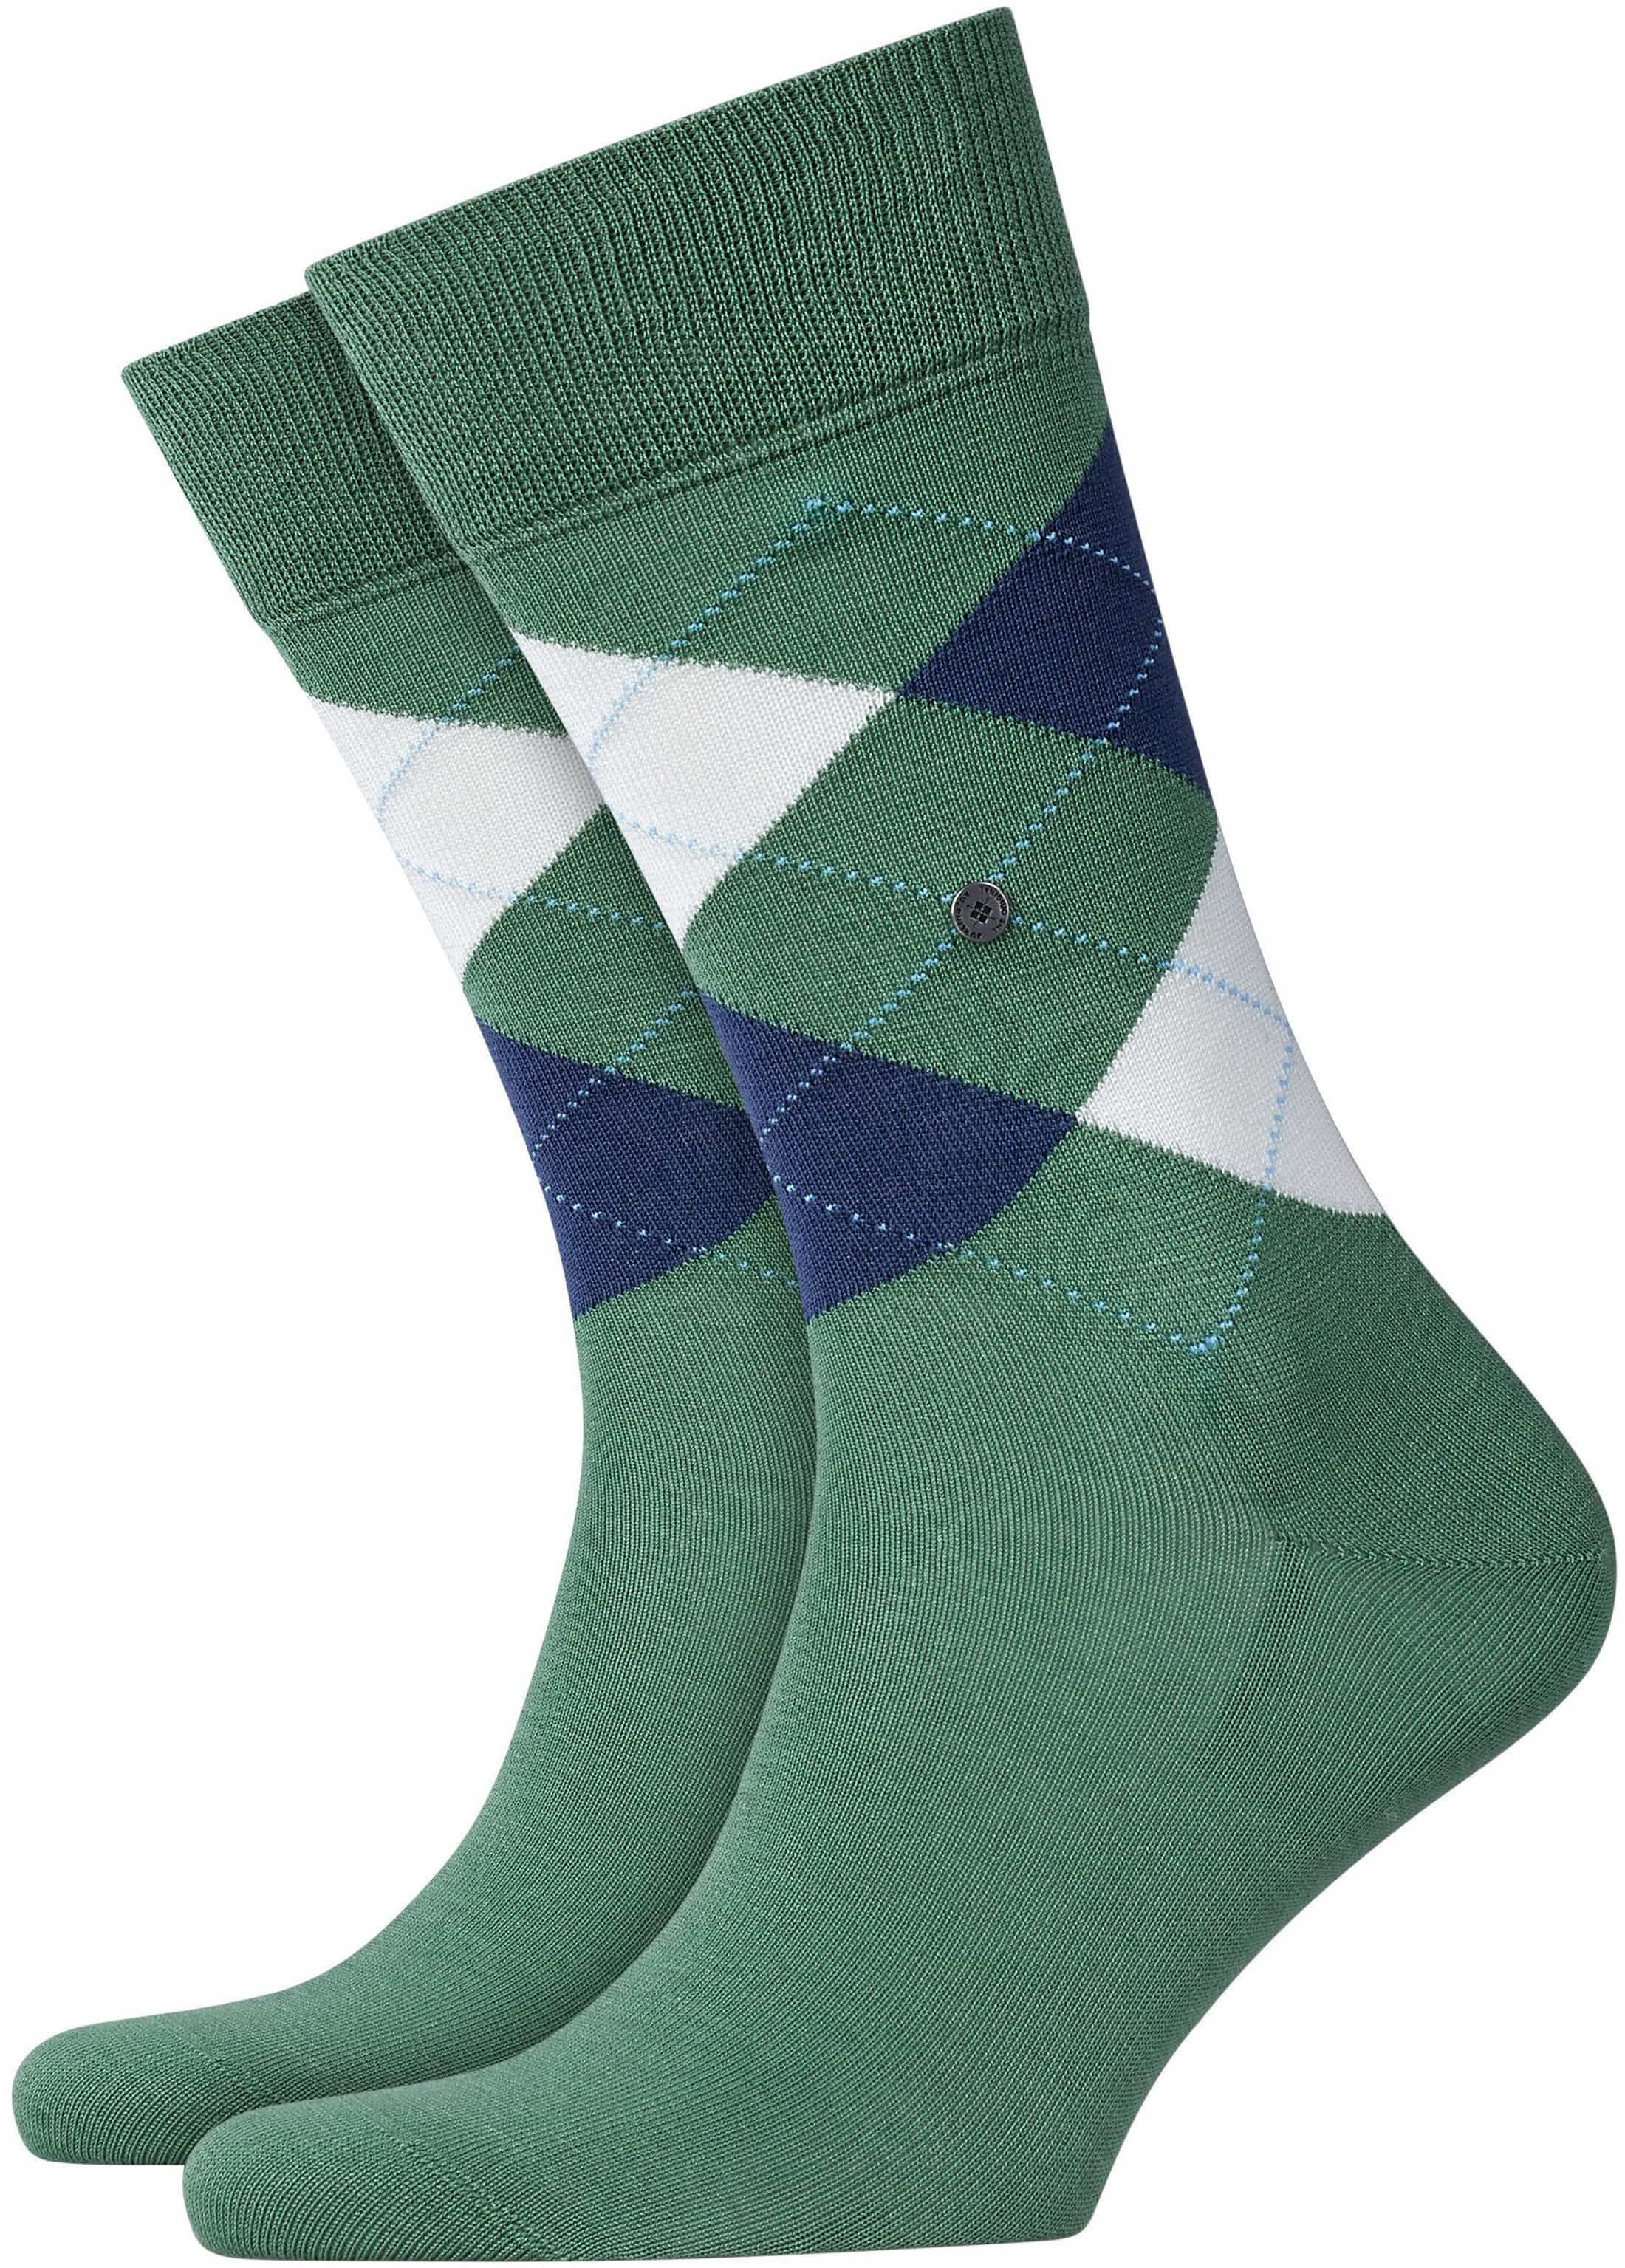 Burlington Socks Manchester 7748 Green size 40-46